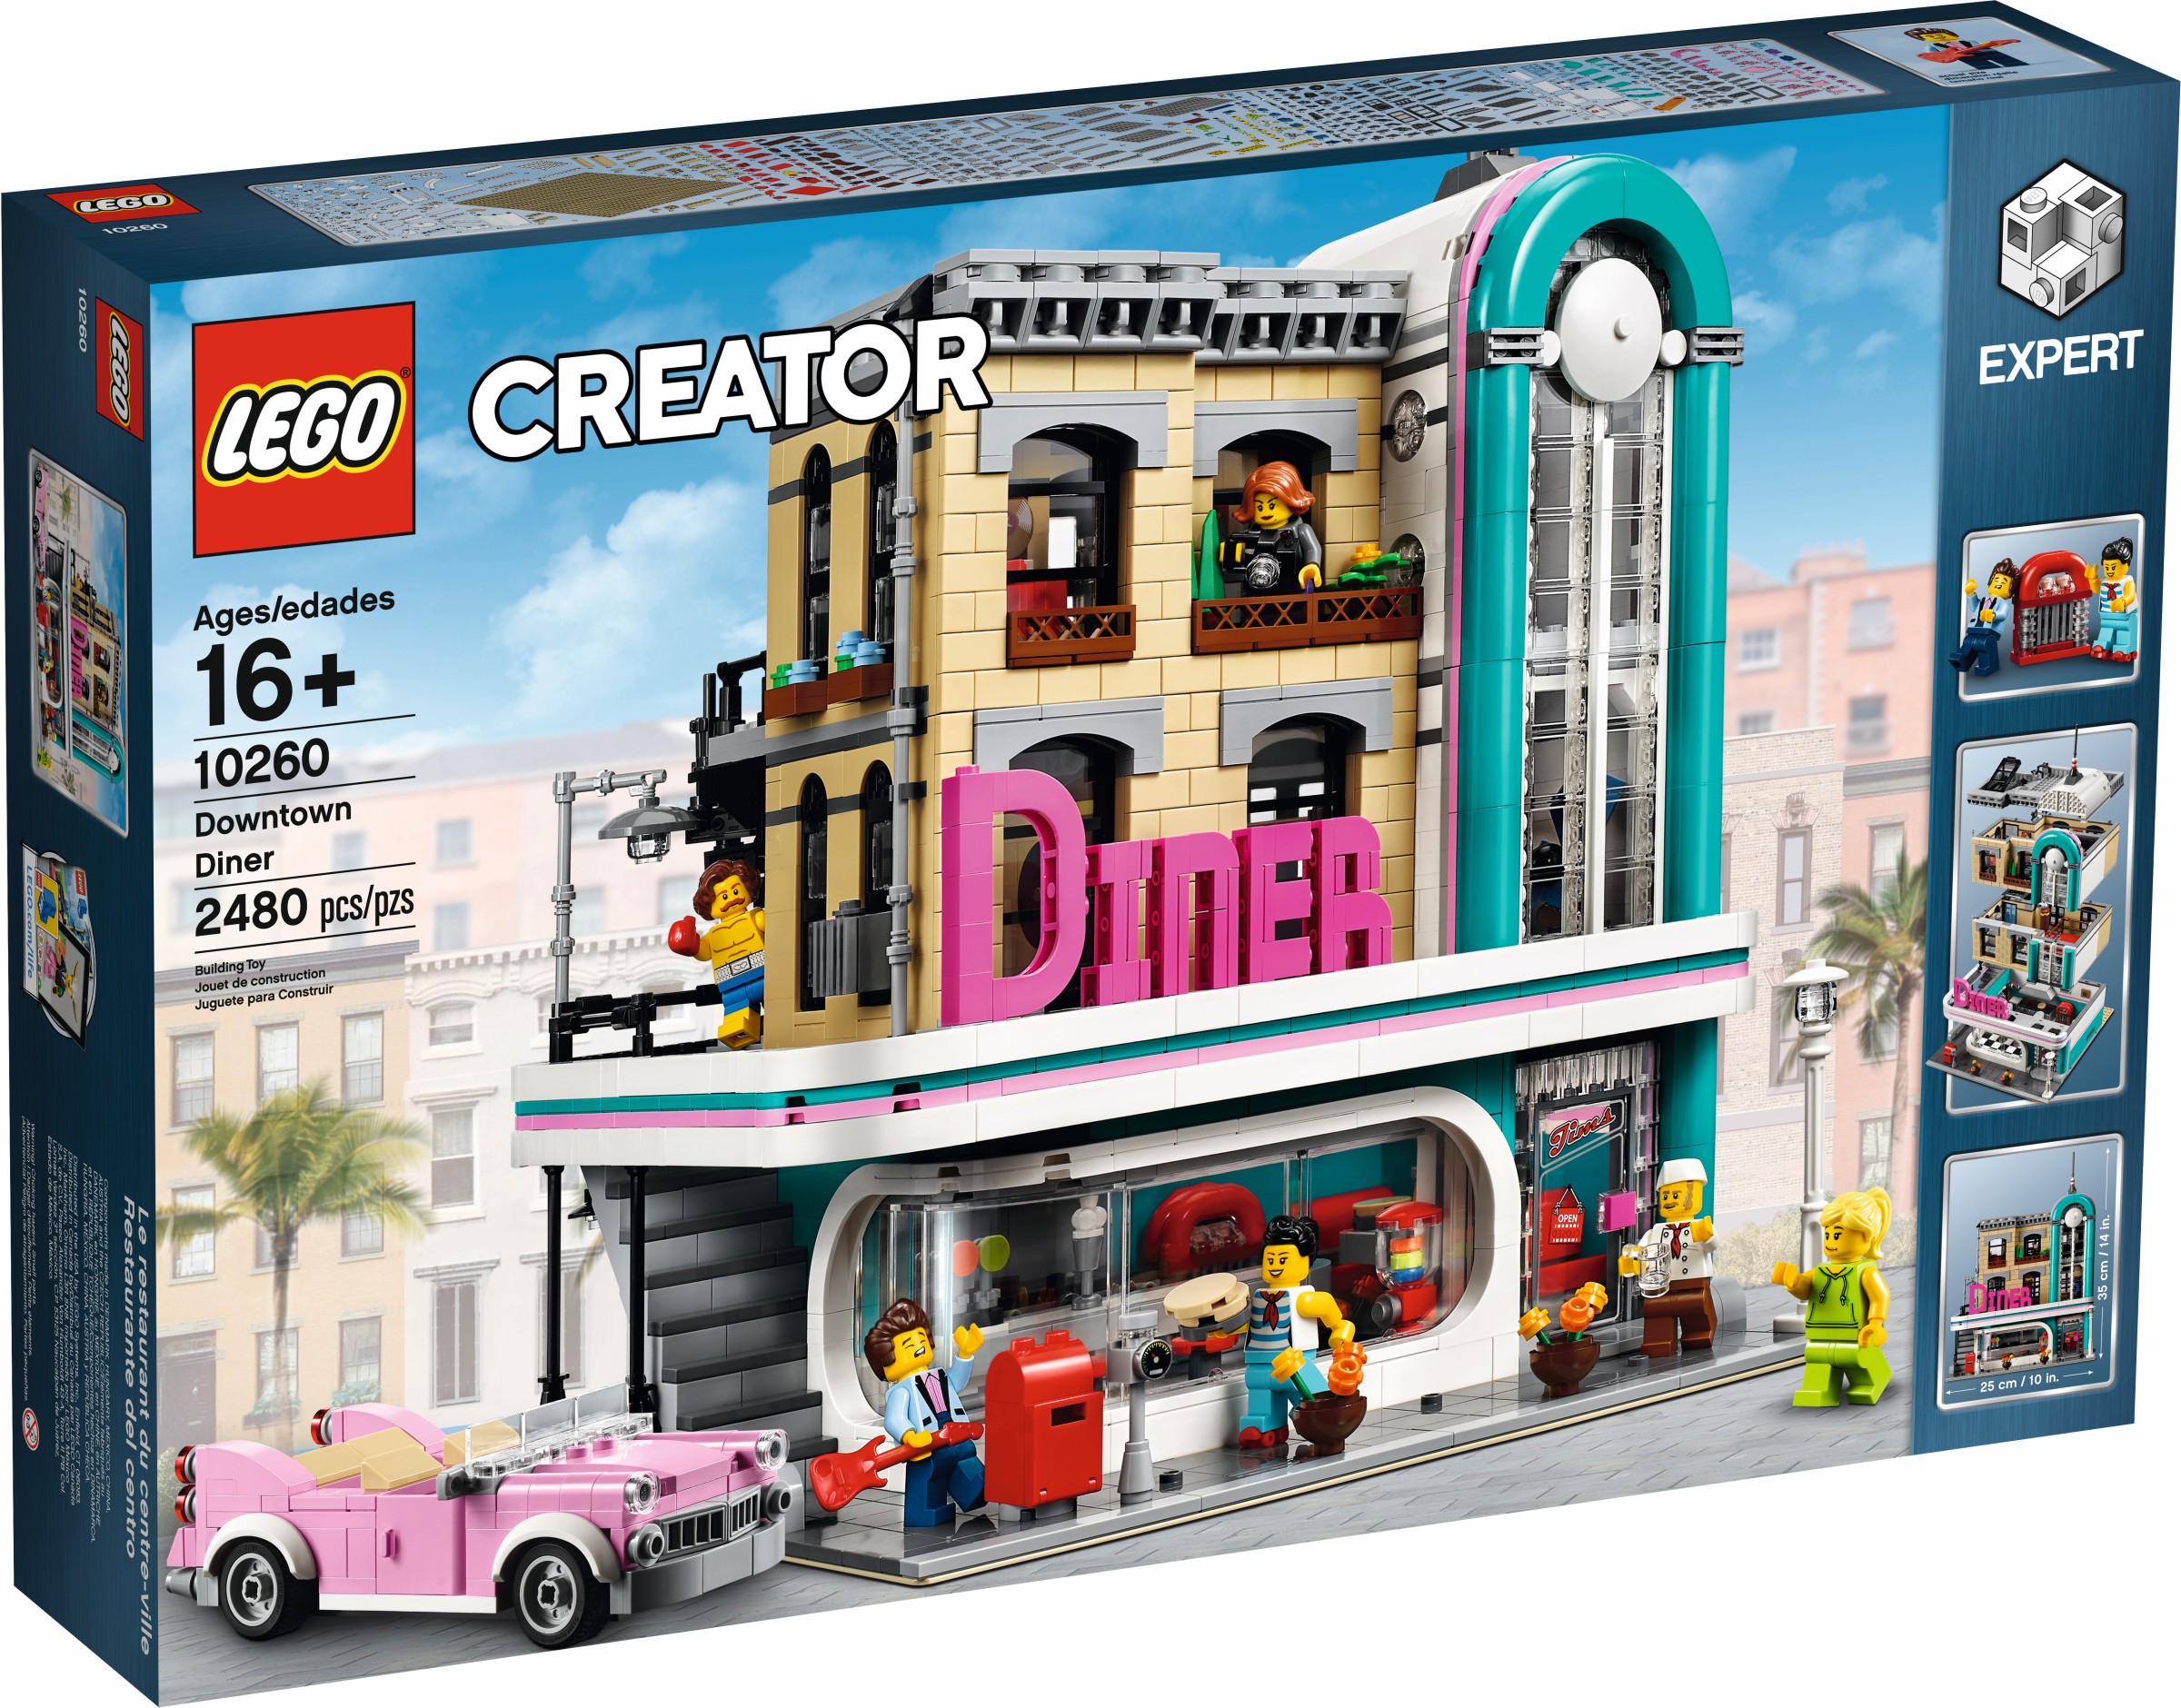 10260 Downtown Diner (1) | Brickset: LEGO guide and database